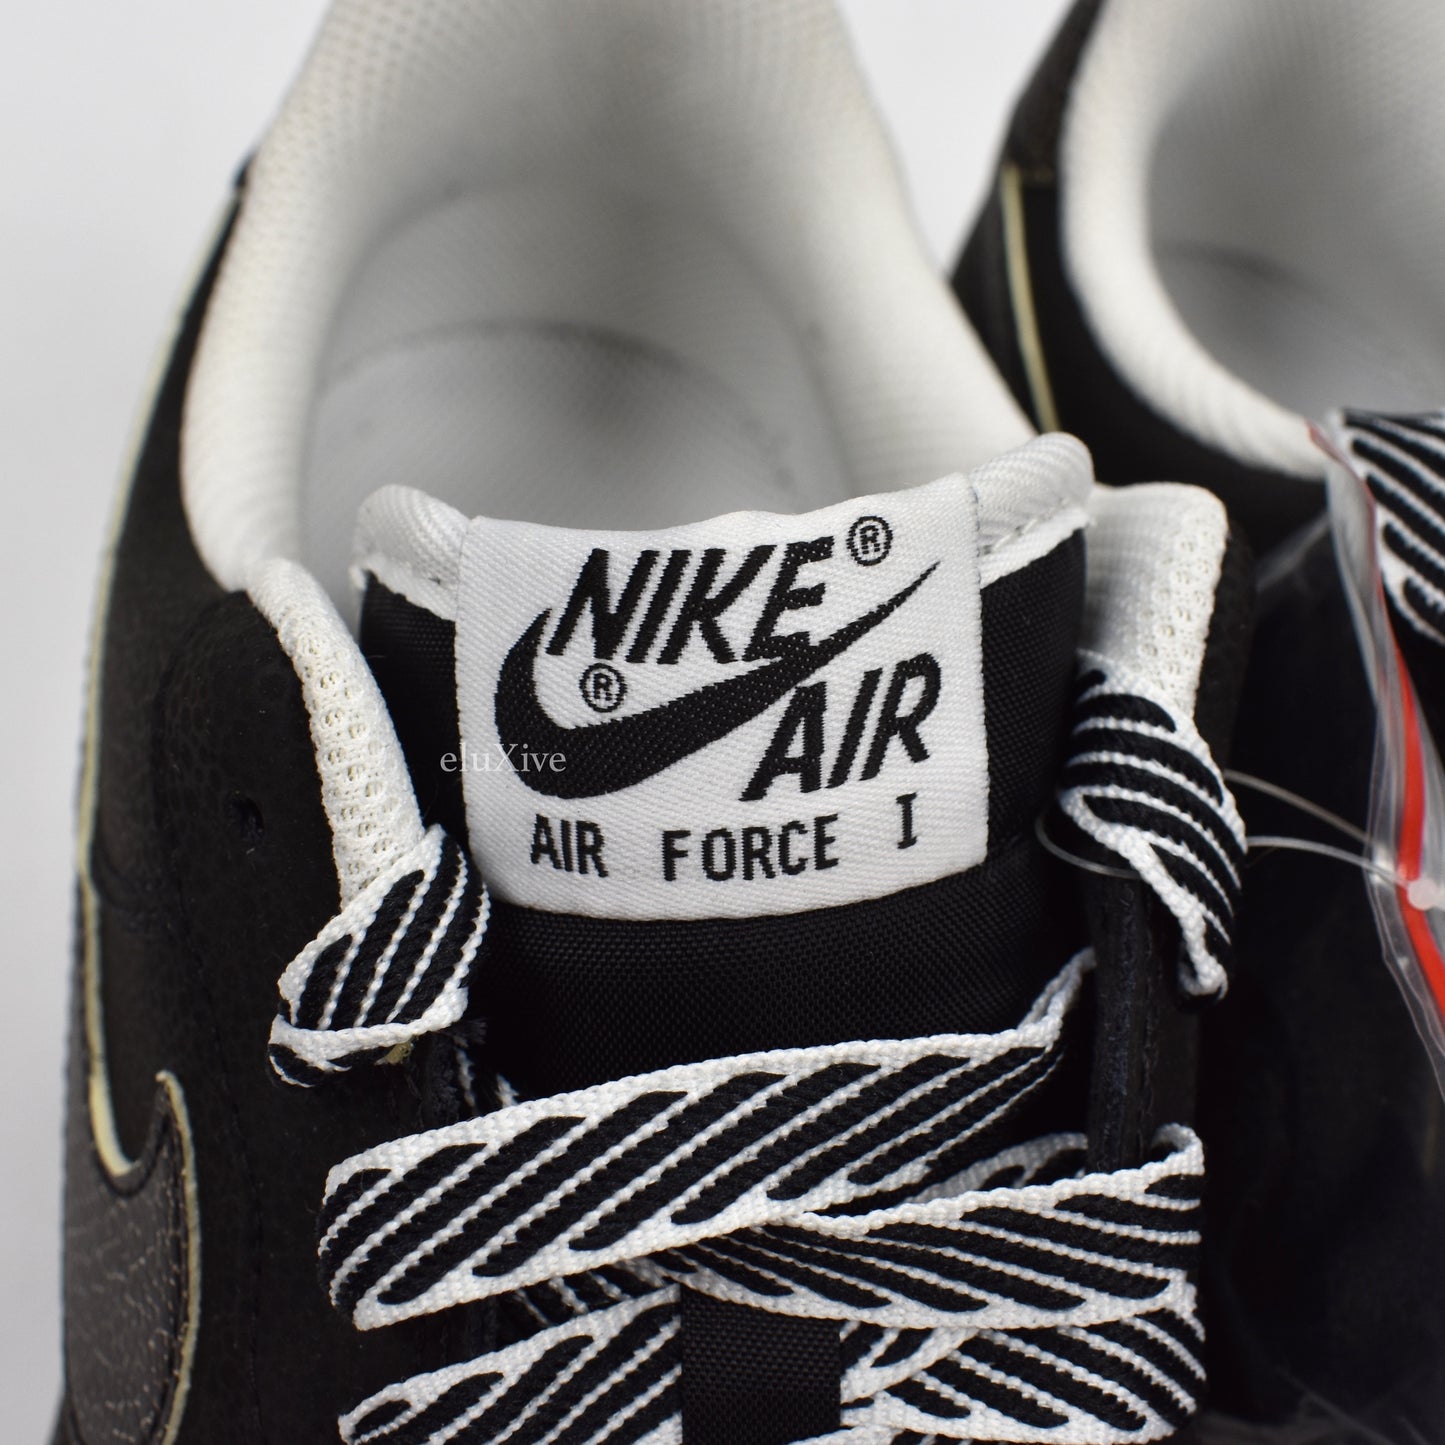 Nike - Air Force 1 'Safari' (Black/White)